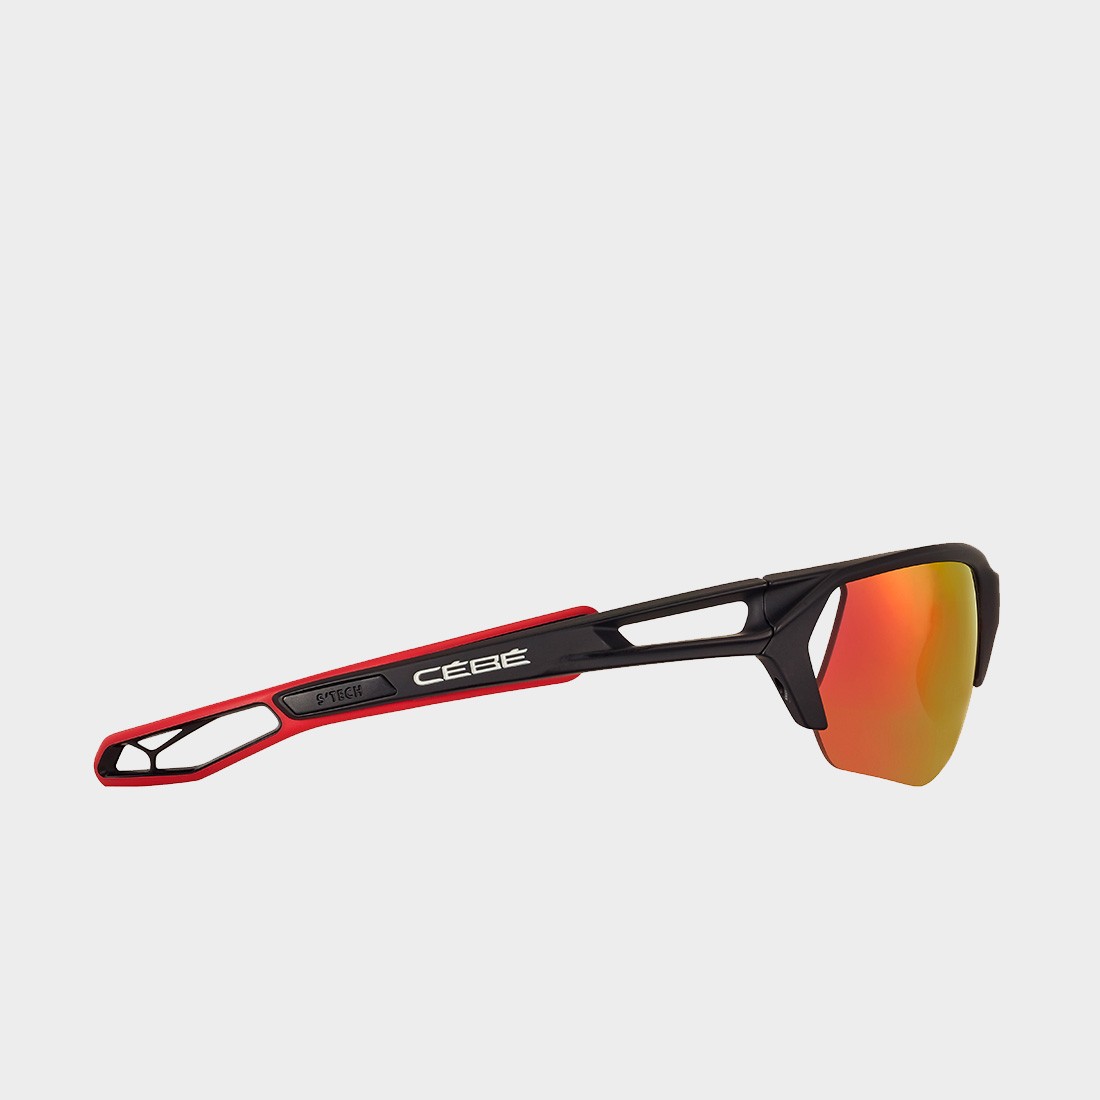 cebe-s-track-ultimate-l-sport-glasses-large-black-red